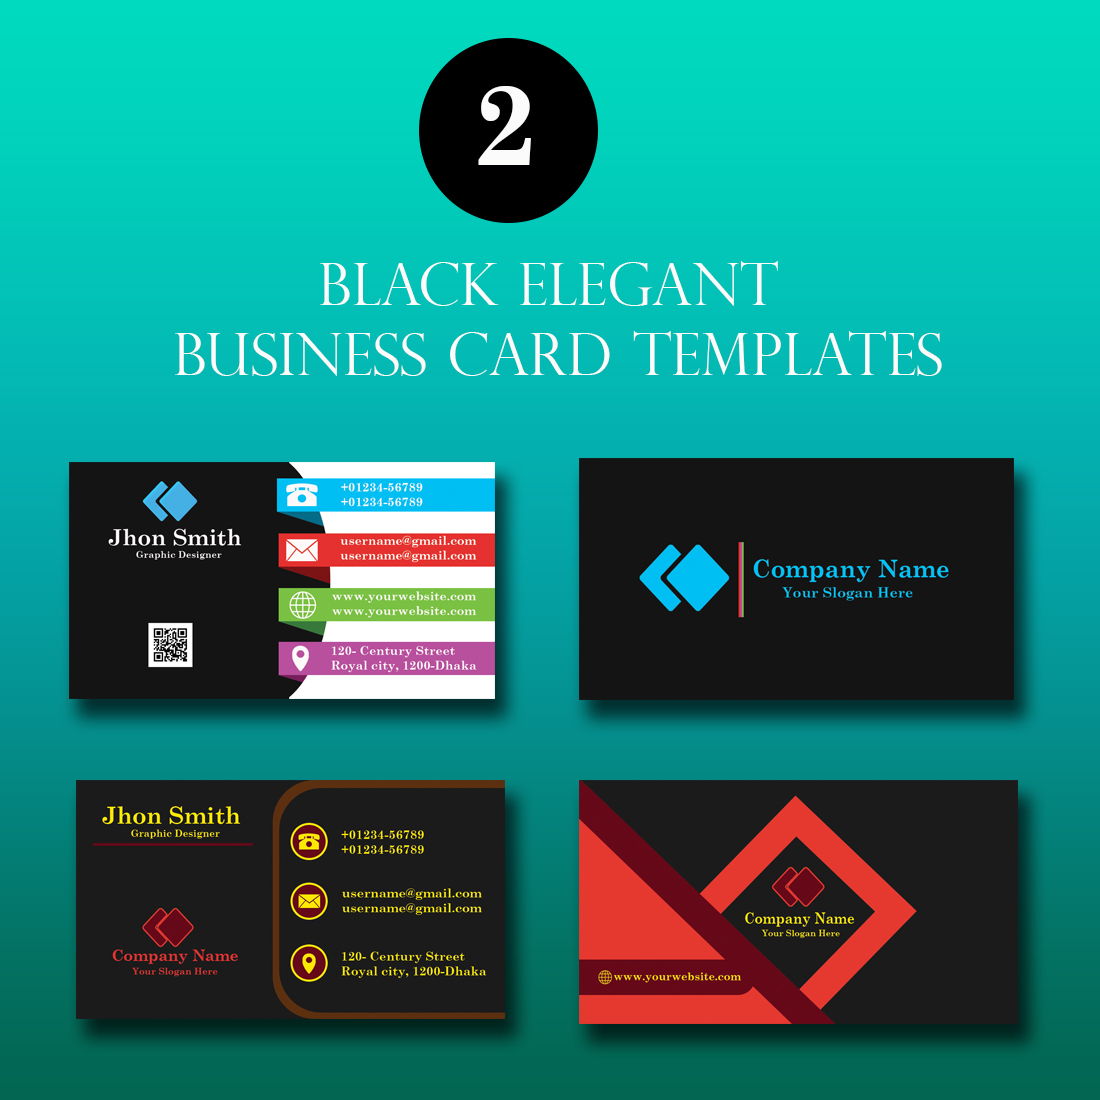 2 Black Creative Elegant Business Card Template cover image.